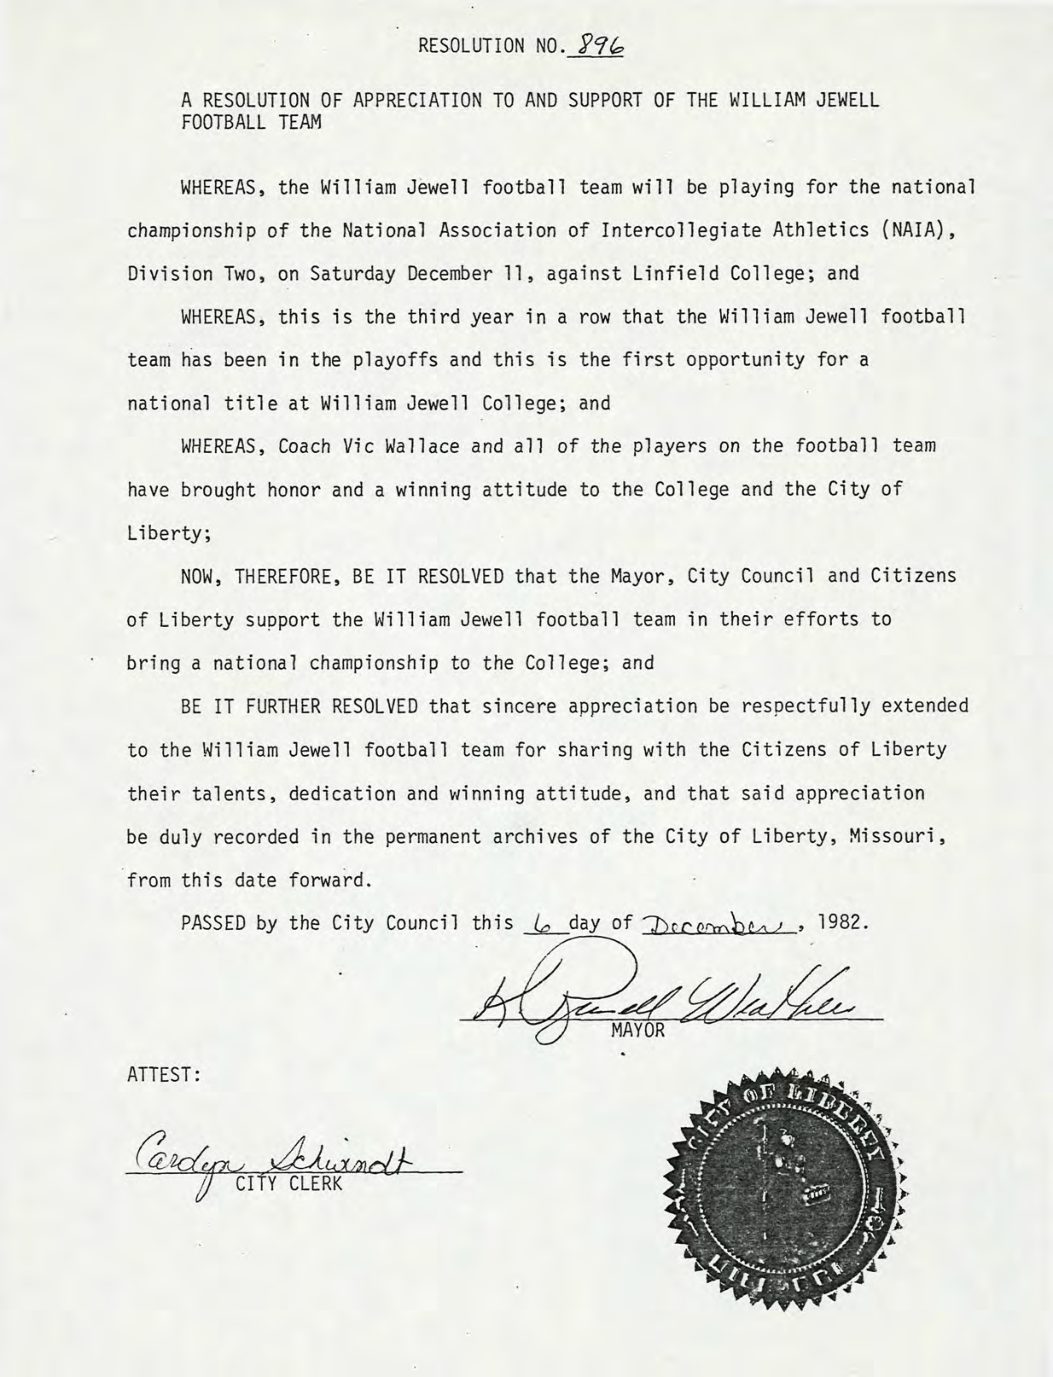 1982 Resolution of Appreciation